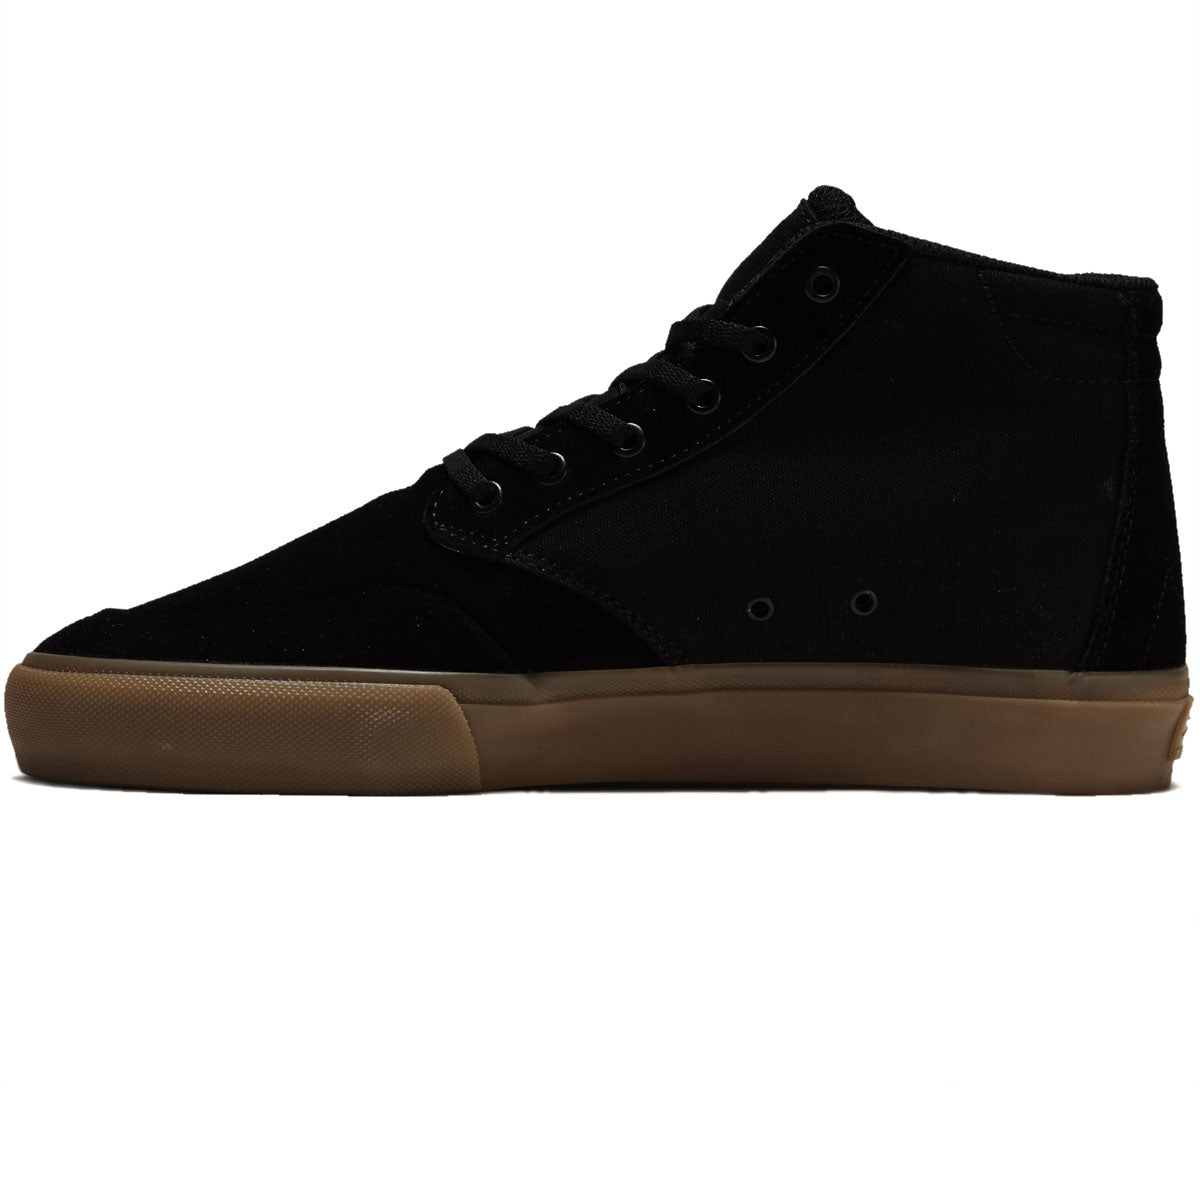 Lakai Riley 3 High Shoes - Black/Gum Suede image 2